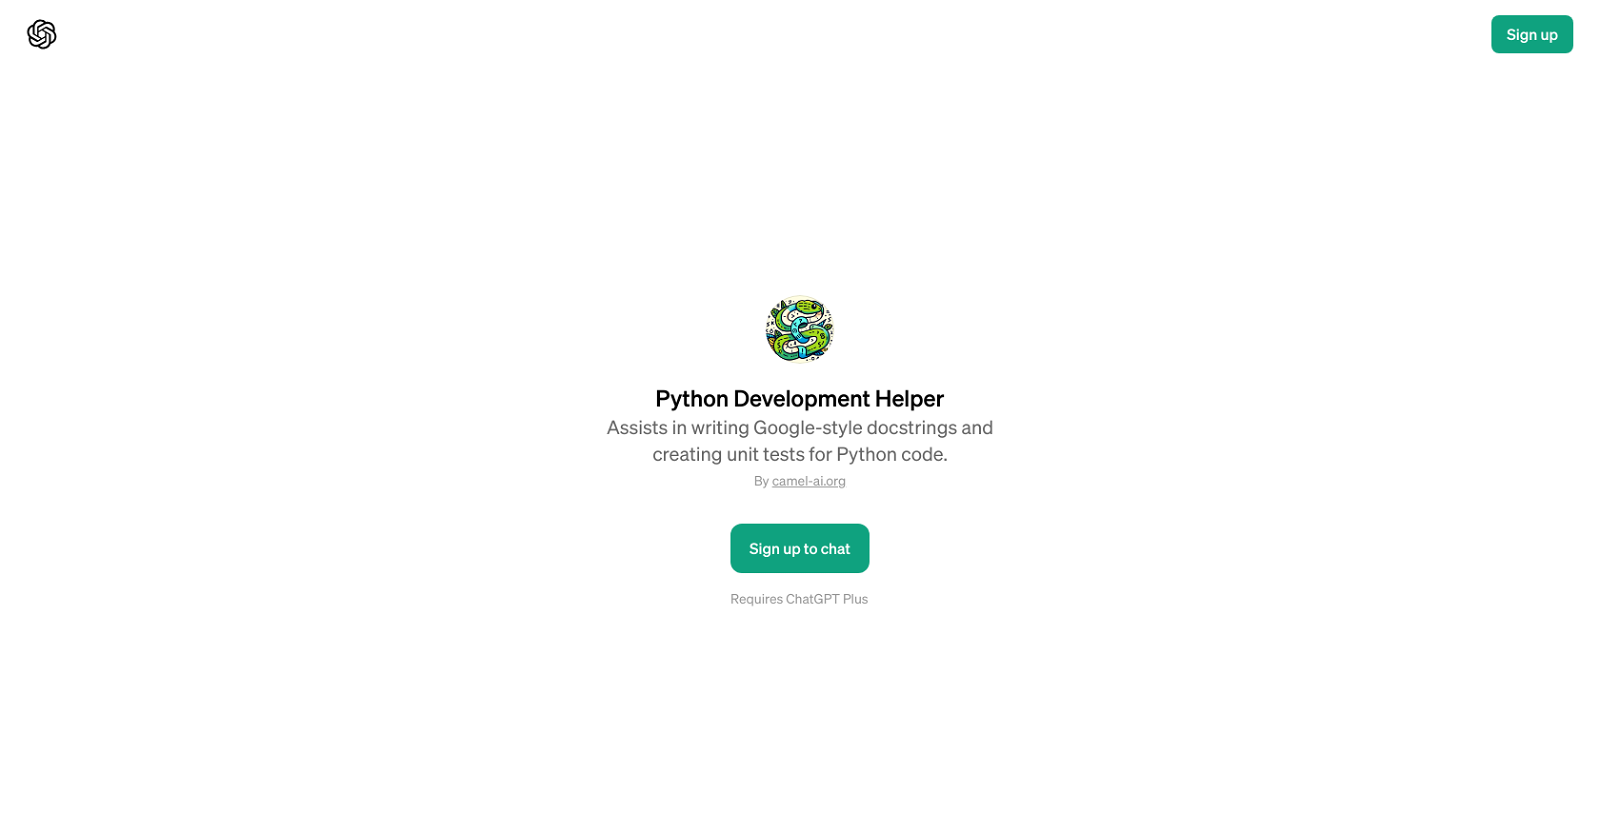 Python Development Helper website